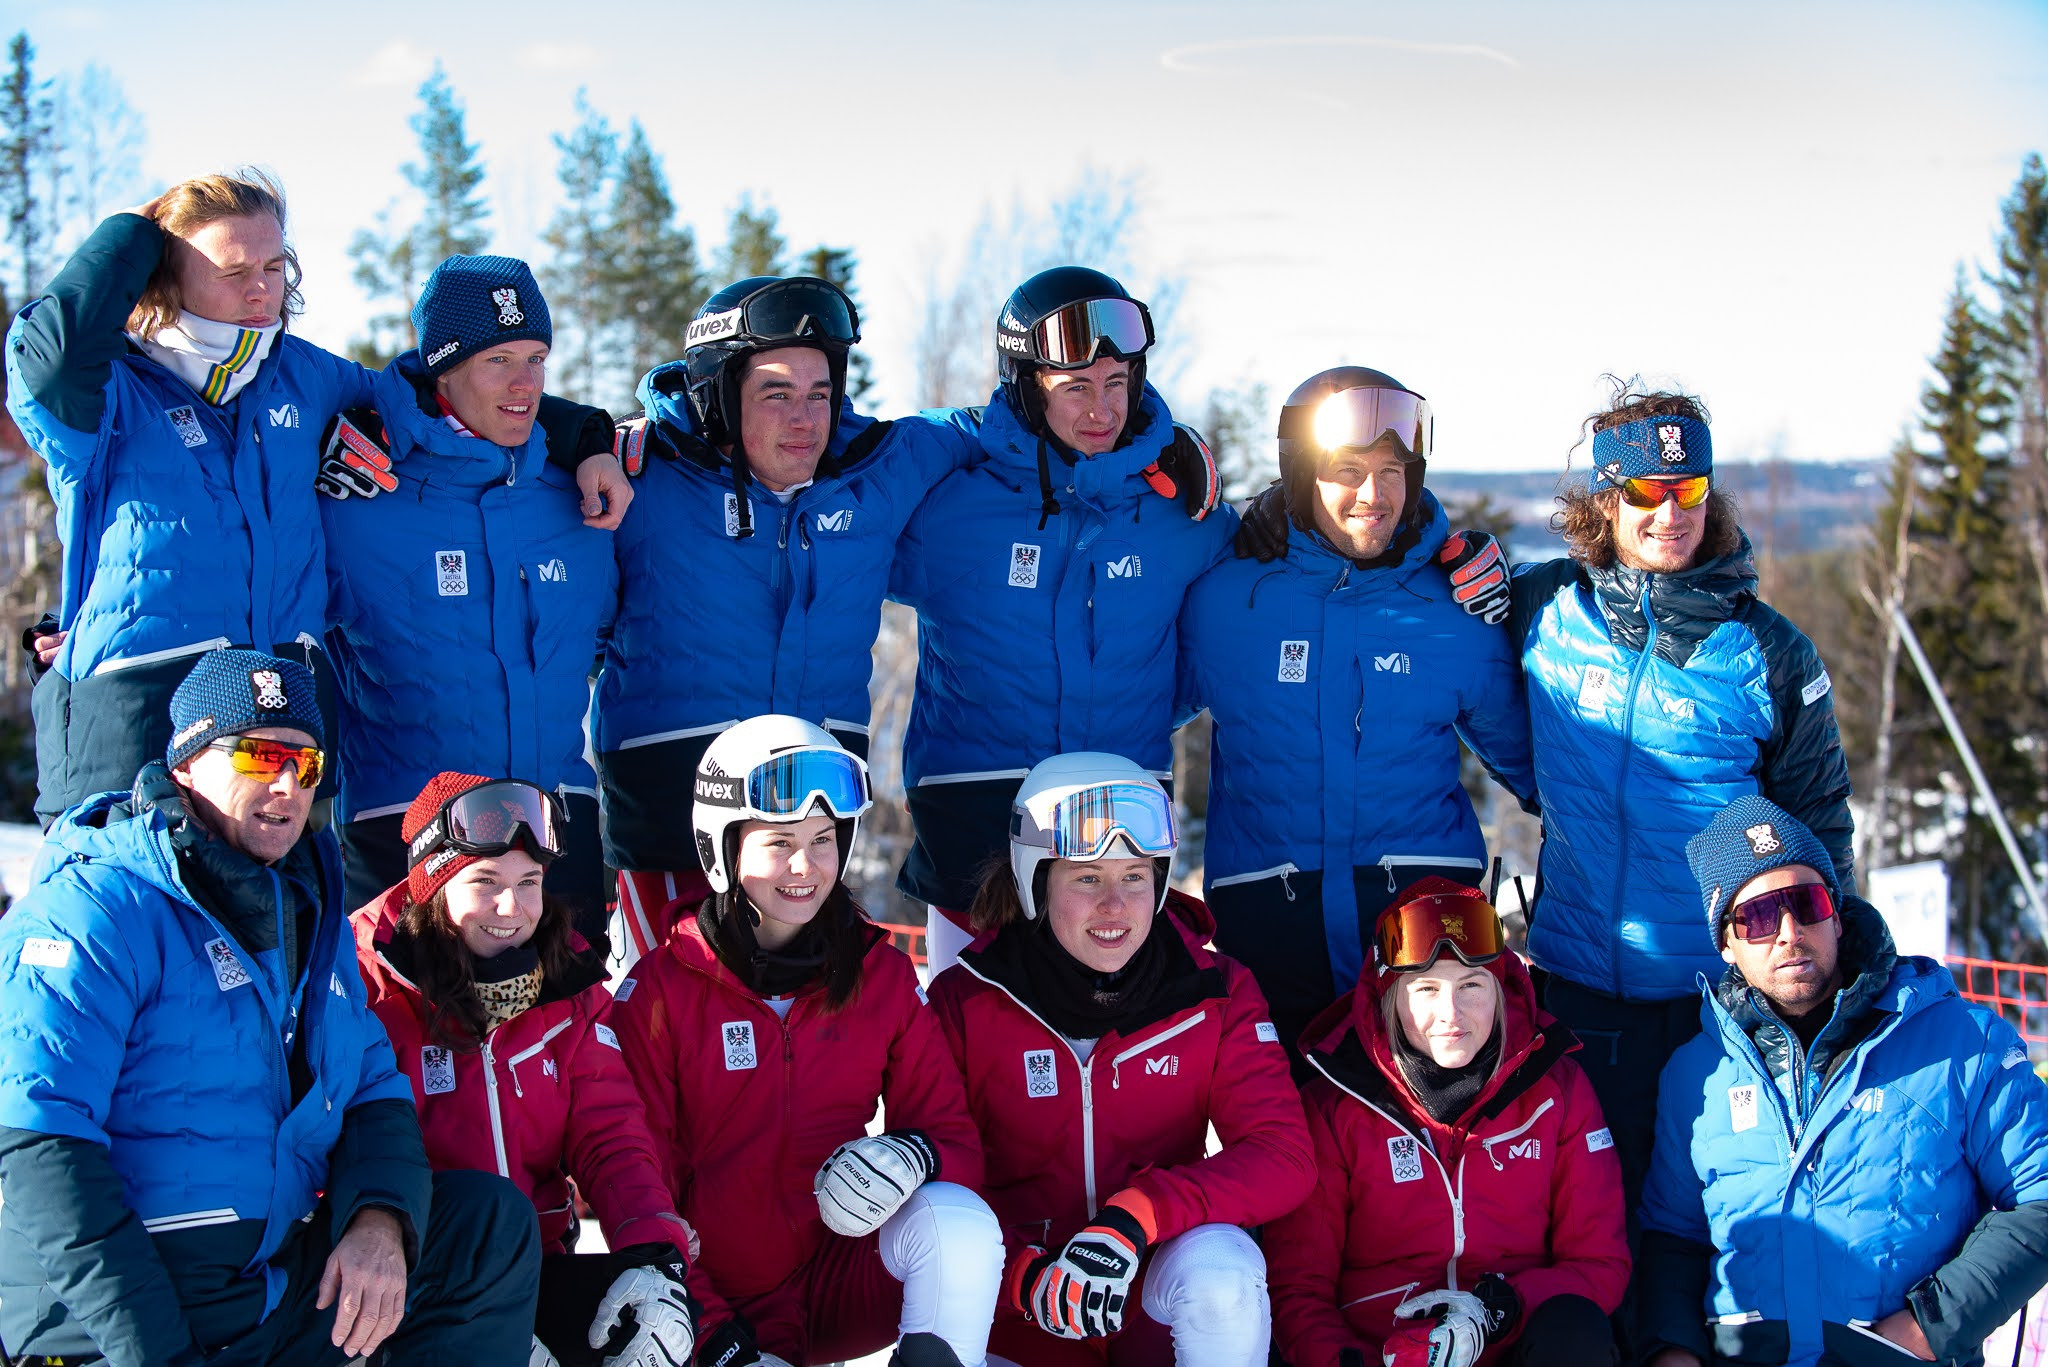 Austria claim mixed team parallel Alpine skiing gold at Winter EYOF in Vuokatti